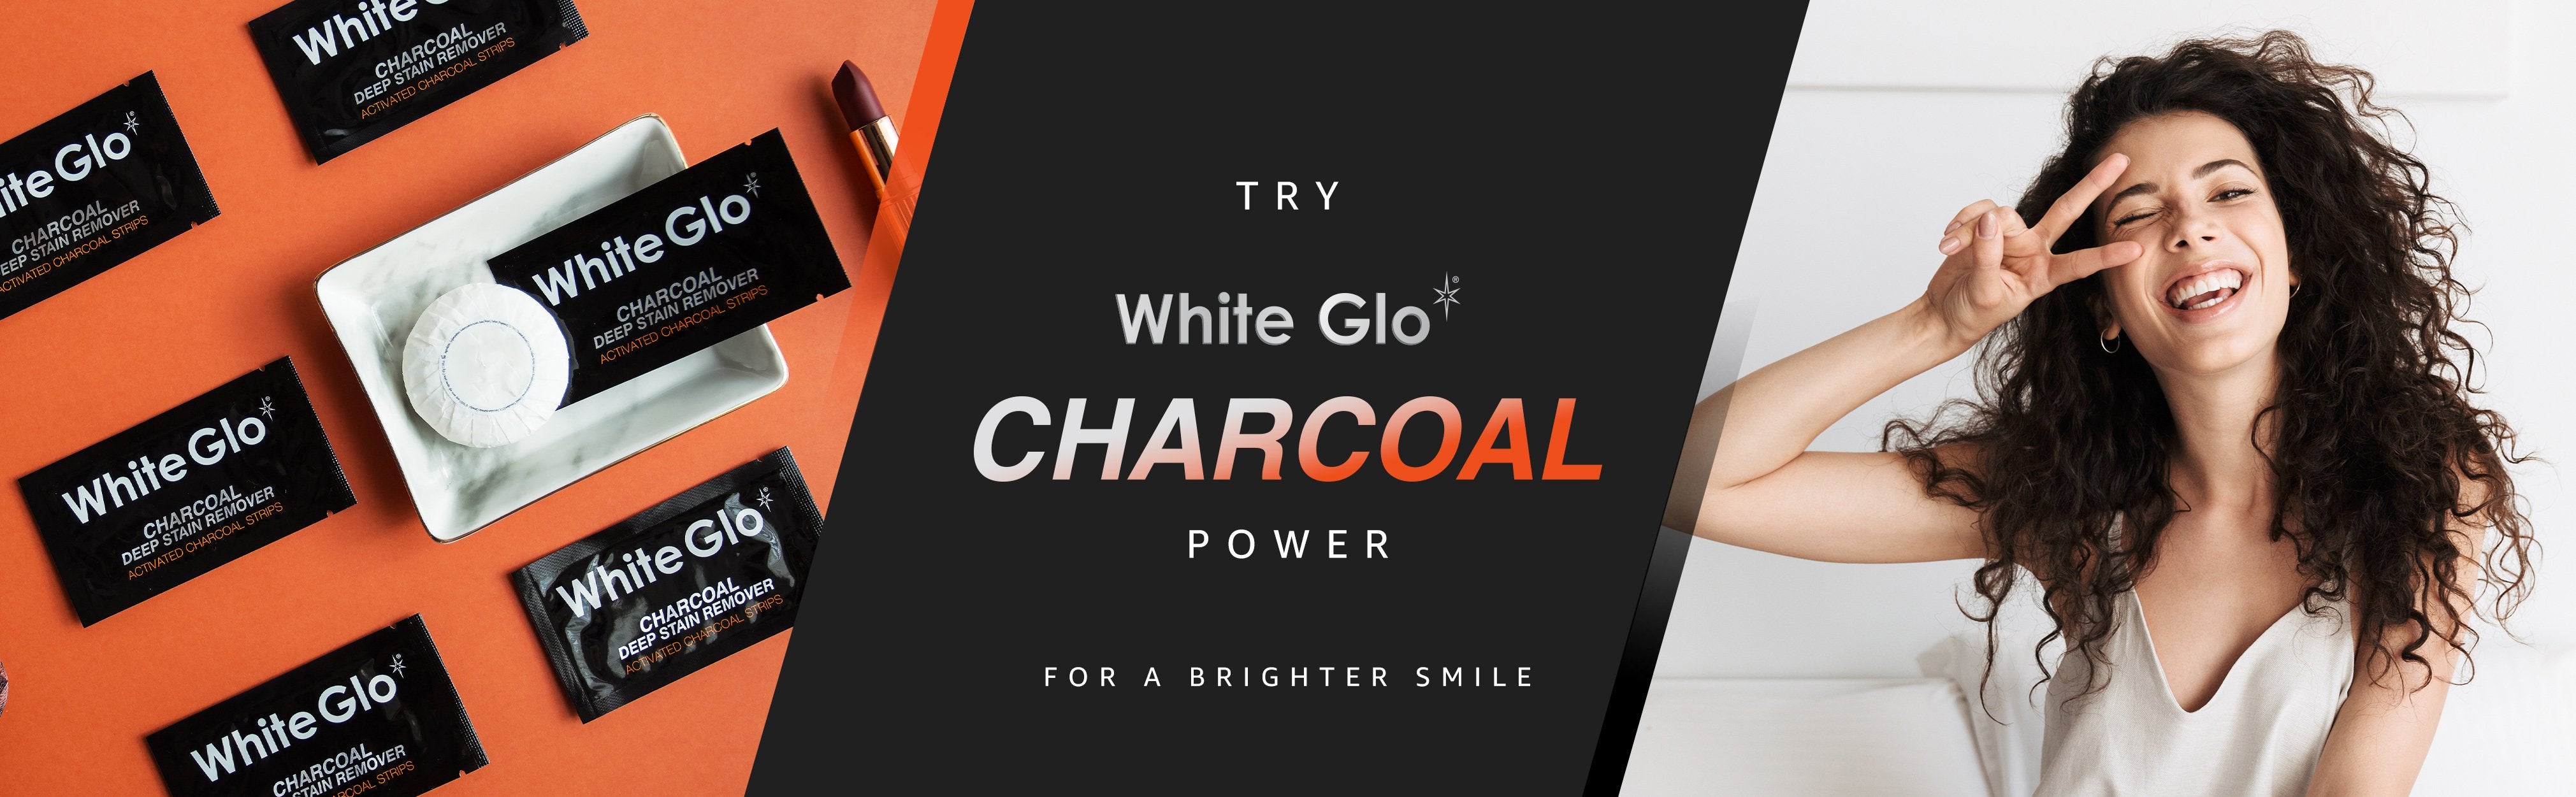 Charcoal Powder Banner